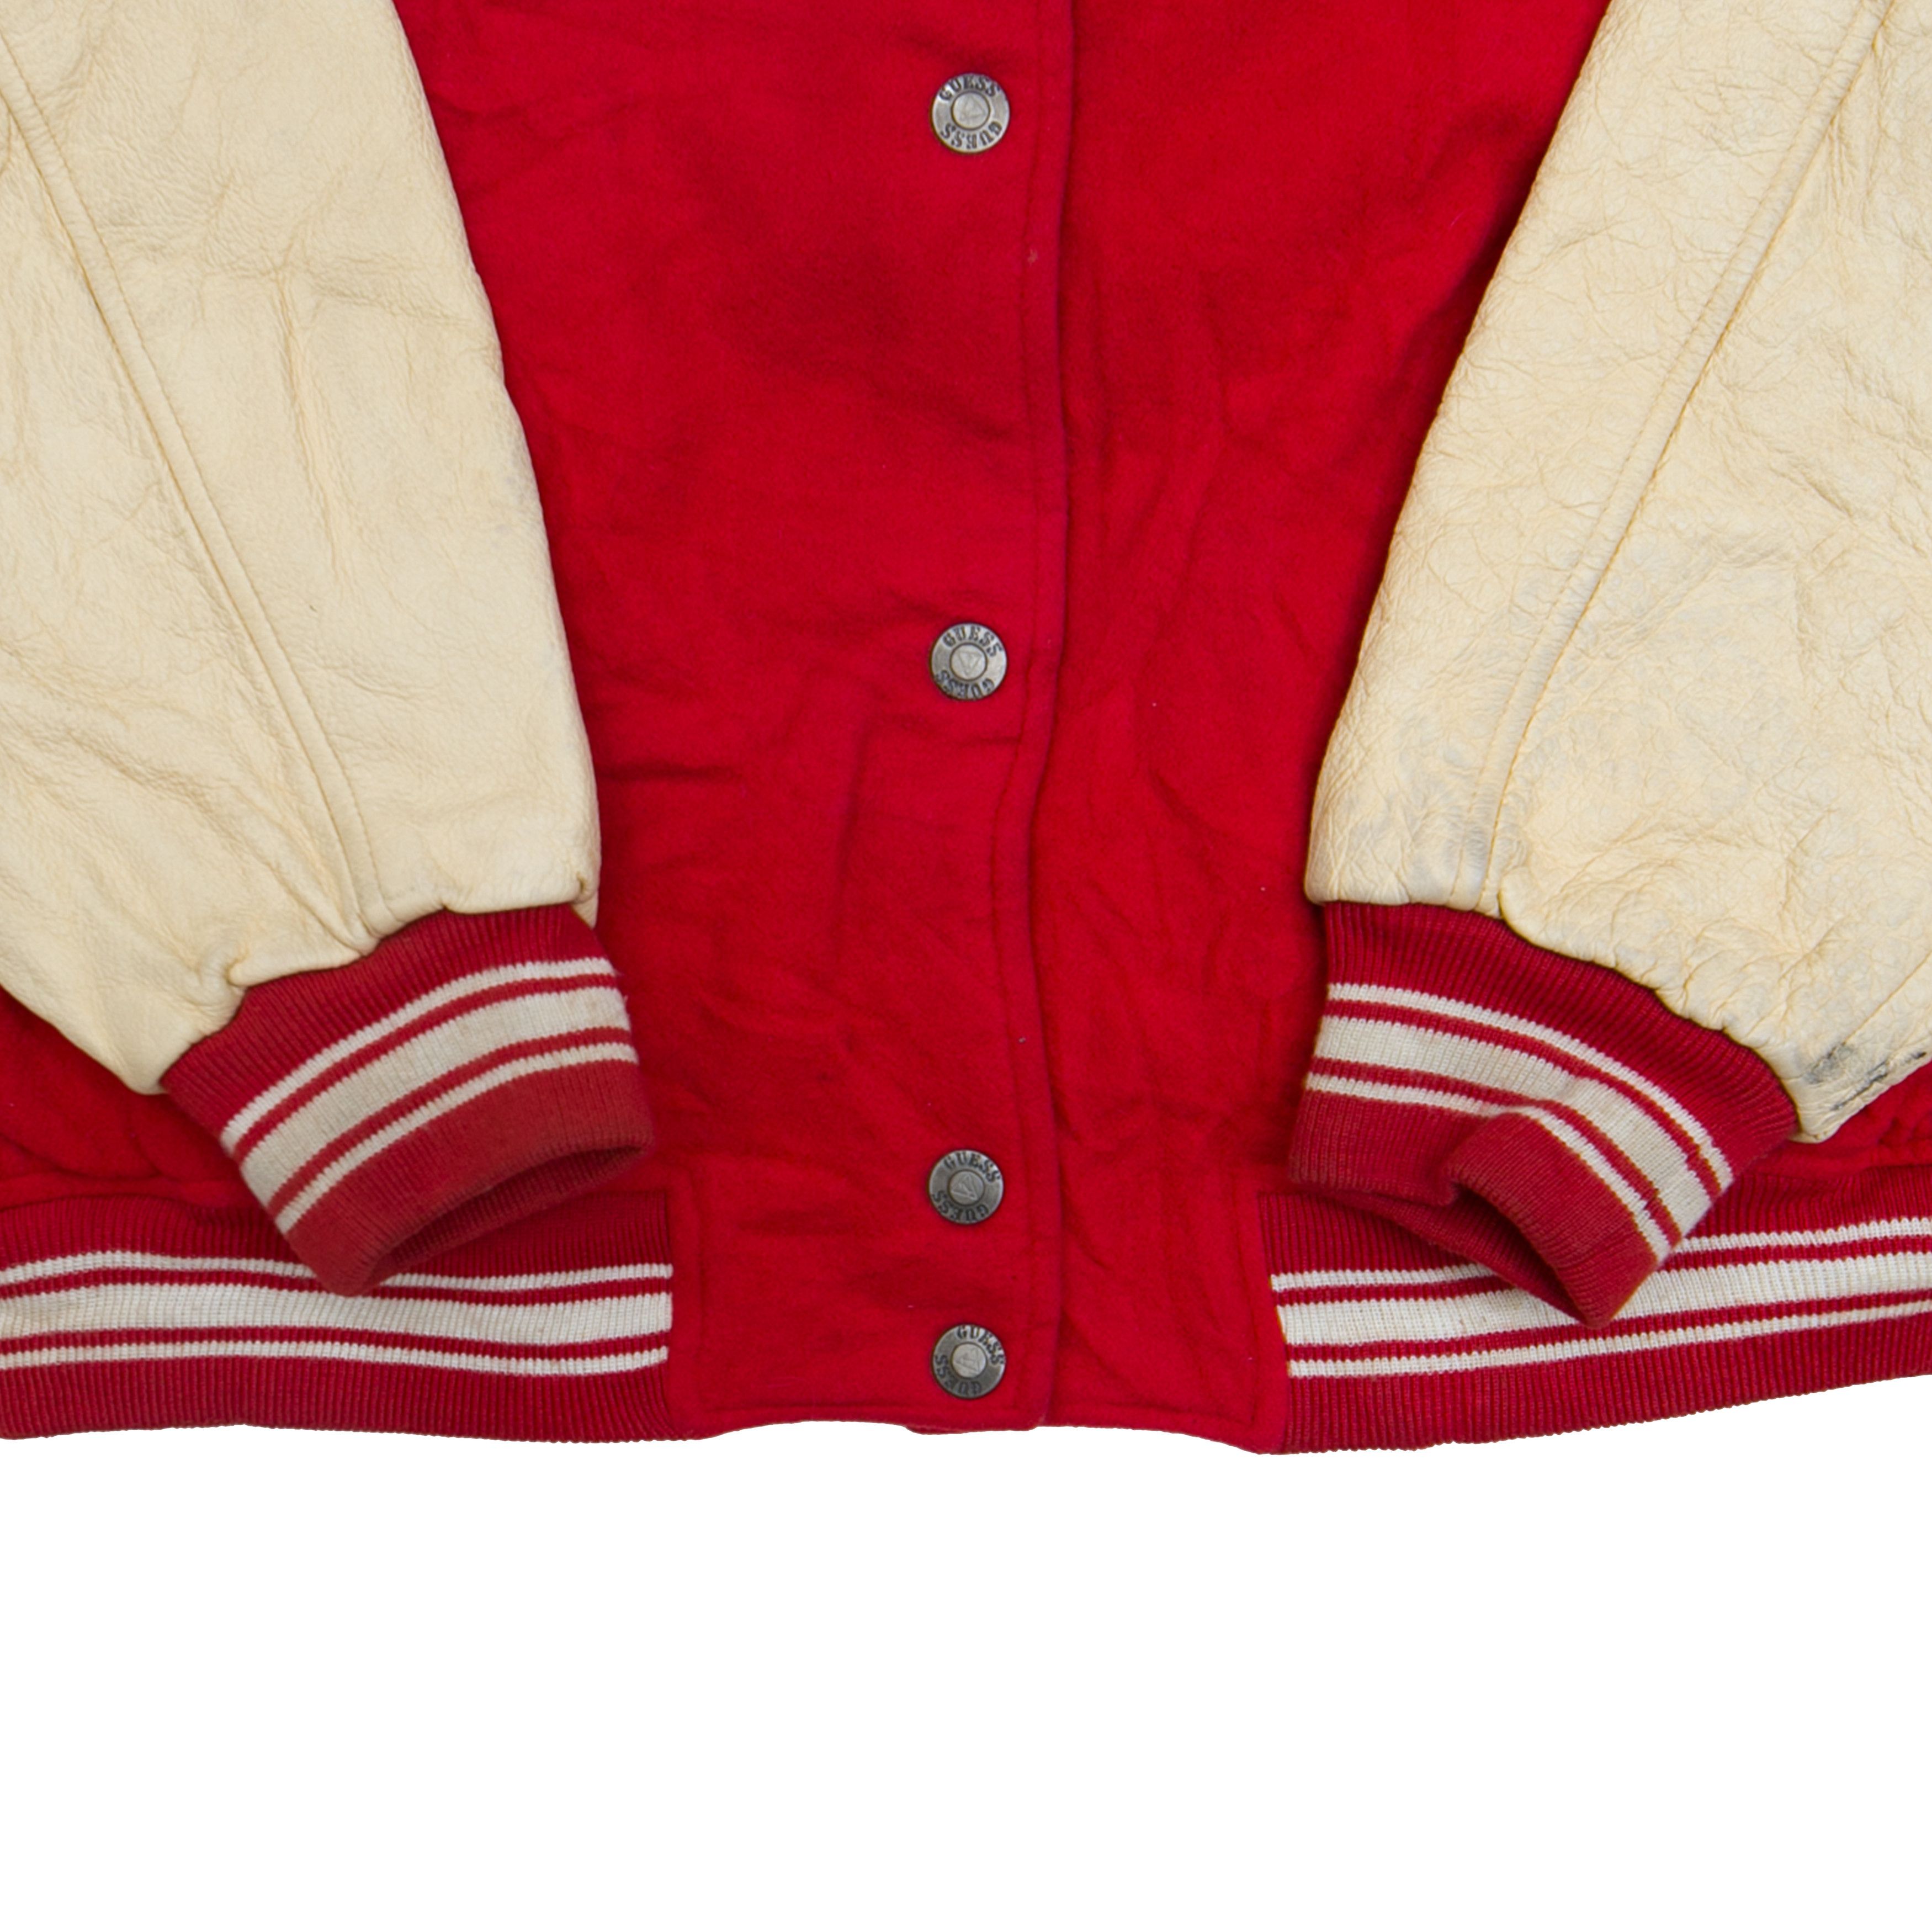 Guess Vintage GUESS Varsity Jacket Size US L / EU 52-54 / 3 - 3 Thumbnail